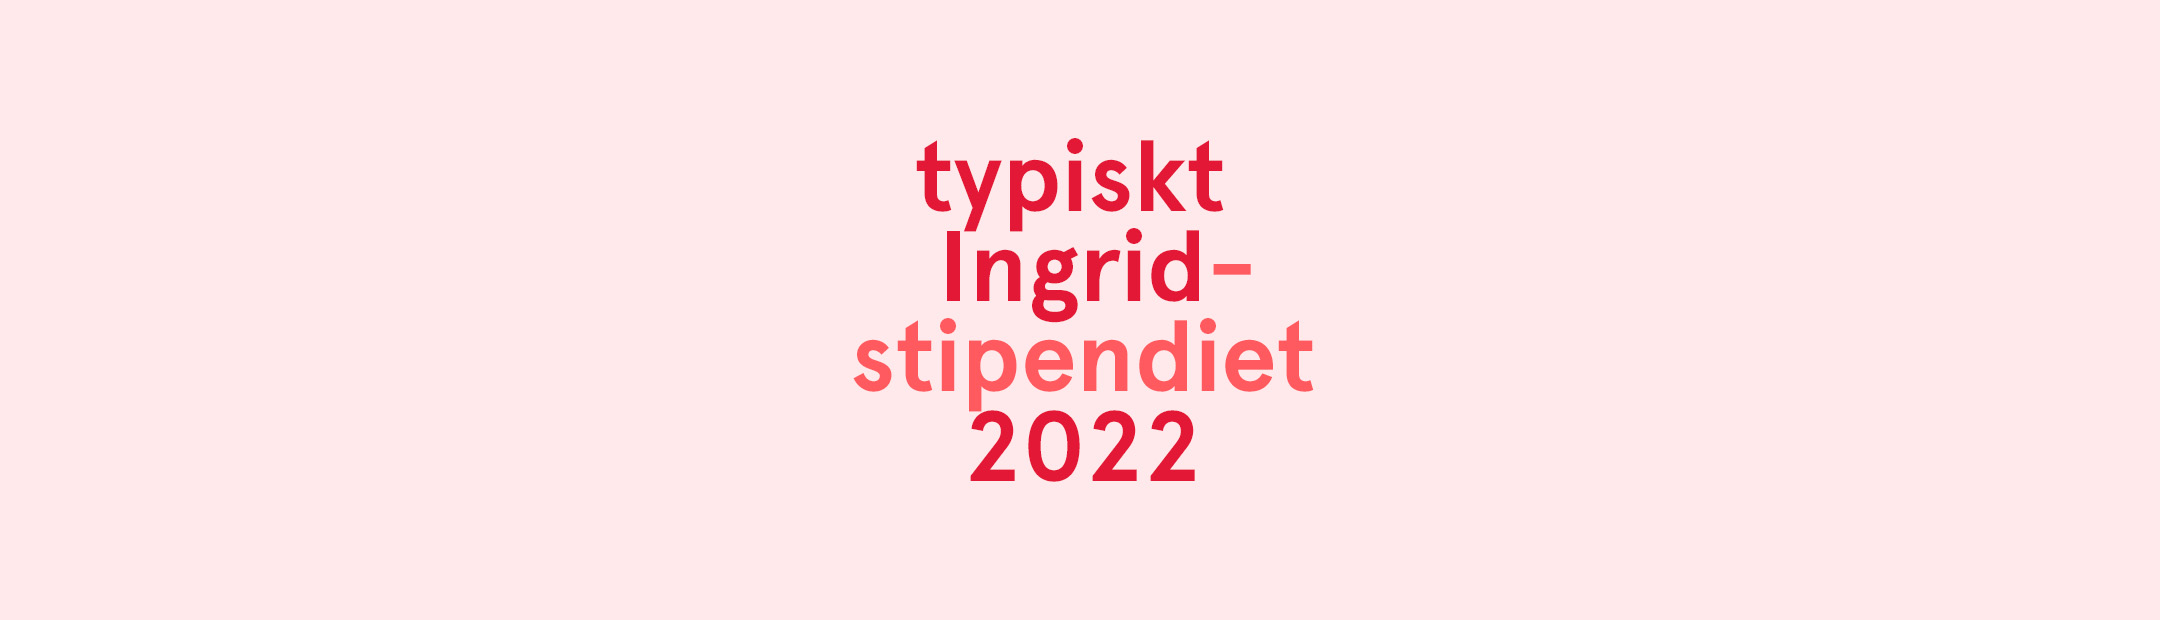 Friskis&Svettis Uppsala Typiskt Ingrid-stipendiet 2022